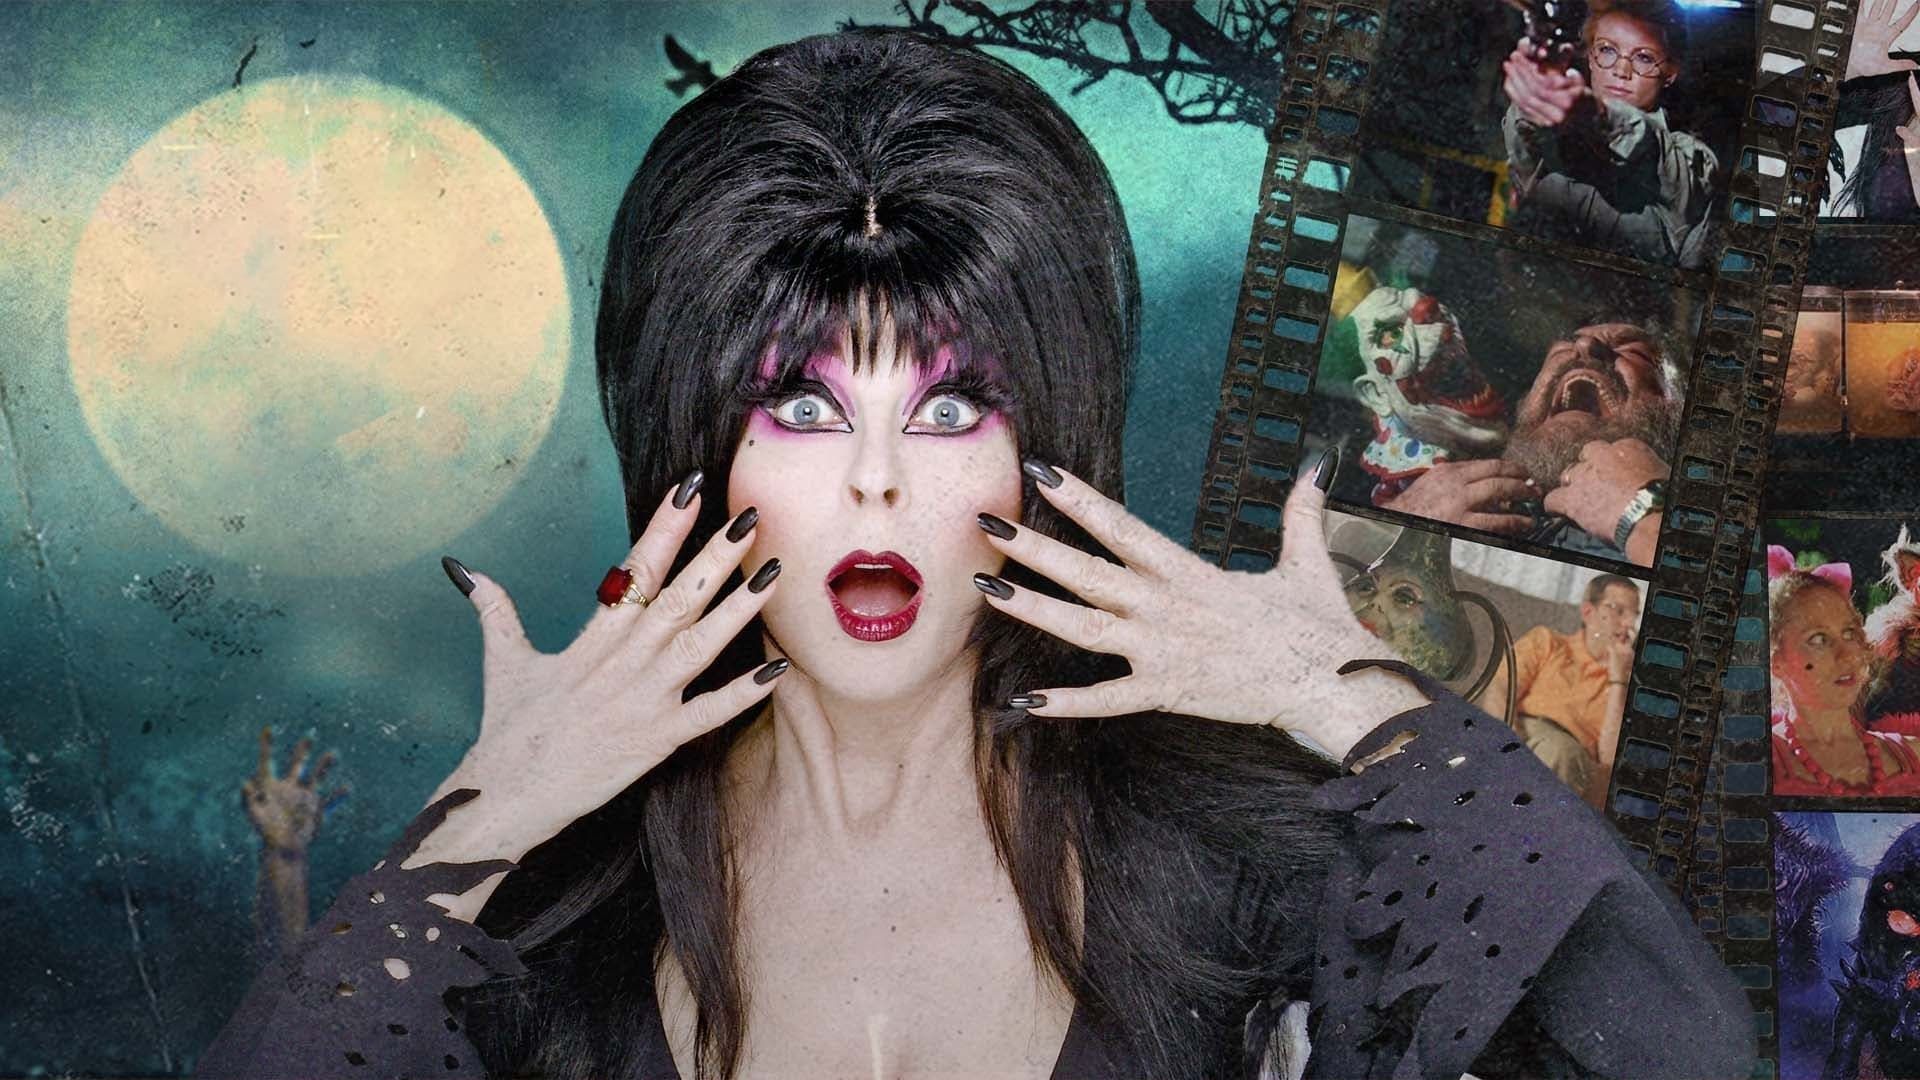 13 Nights of Elvira background